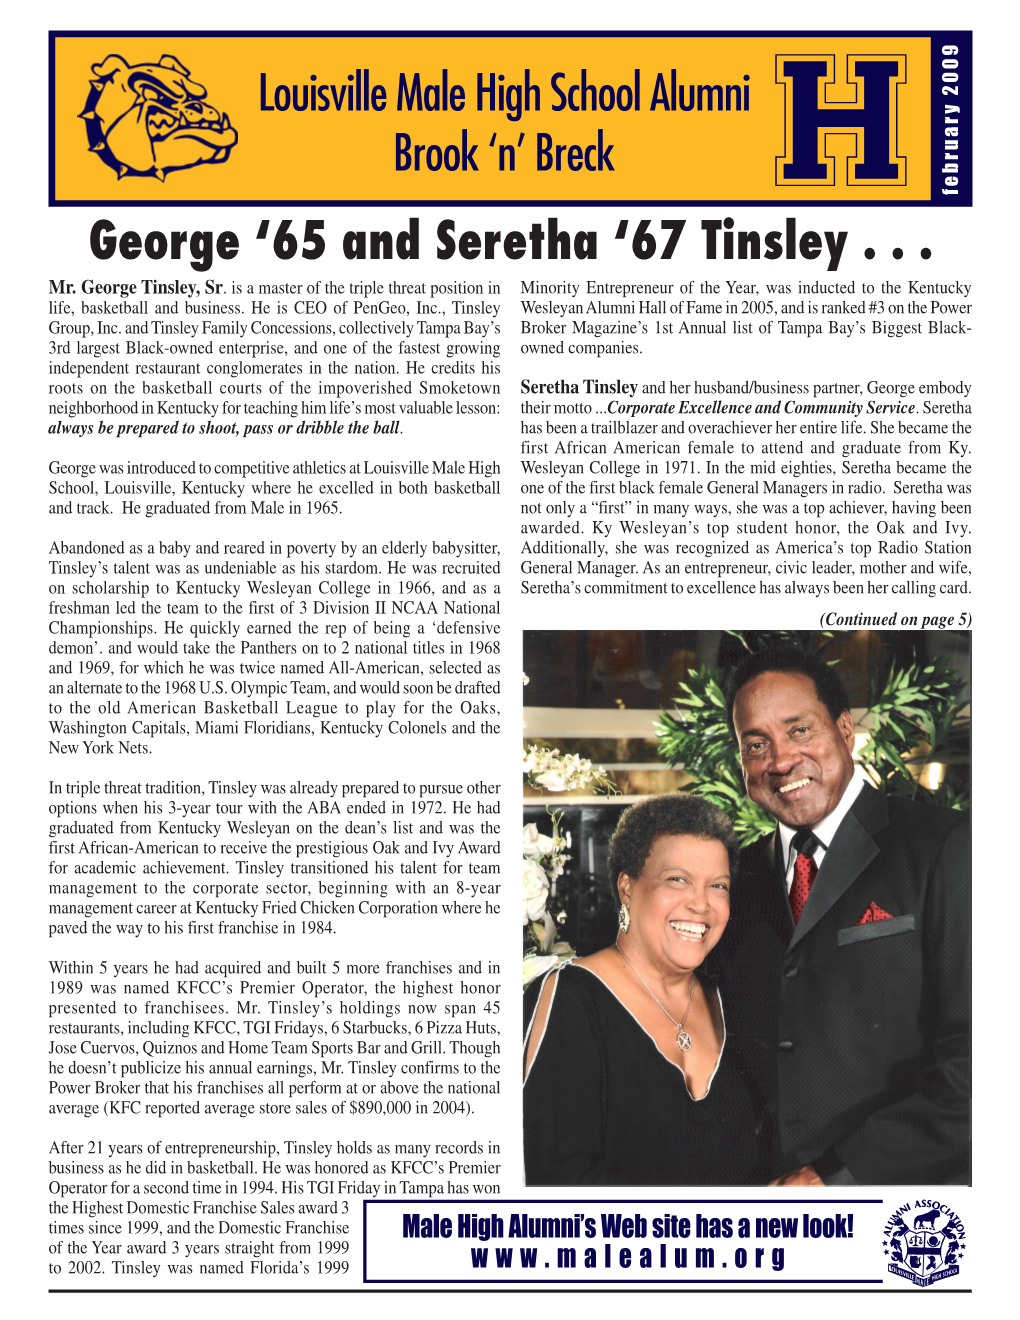 Louisville Male High School Alumni: George '65 and Seretha '67 Tinsley…